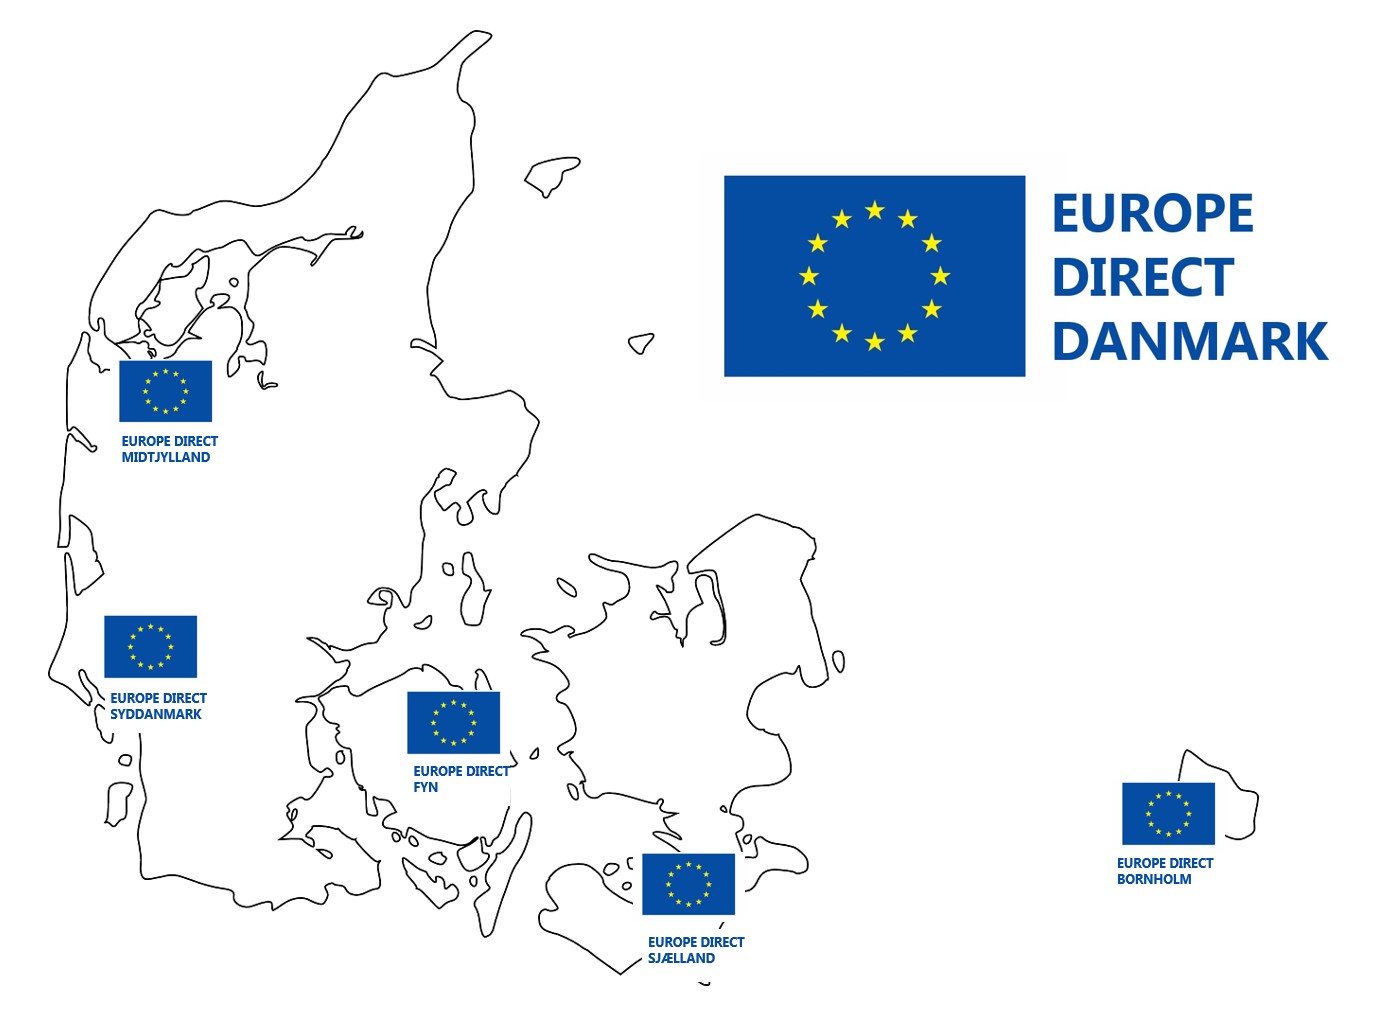 Kort over Europa Direct Centre i Danmark. Der er centre i Struer, Varde, Odense, Guldborgsund og Rønne